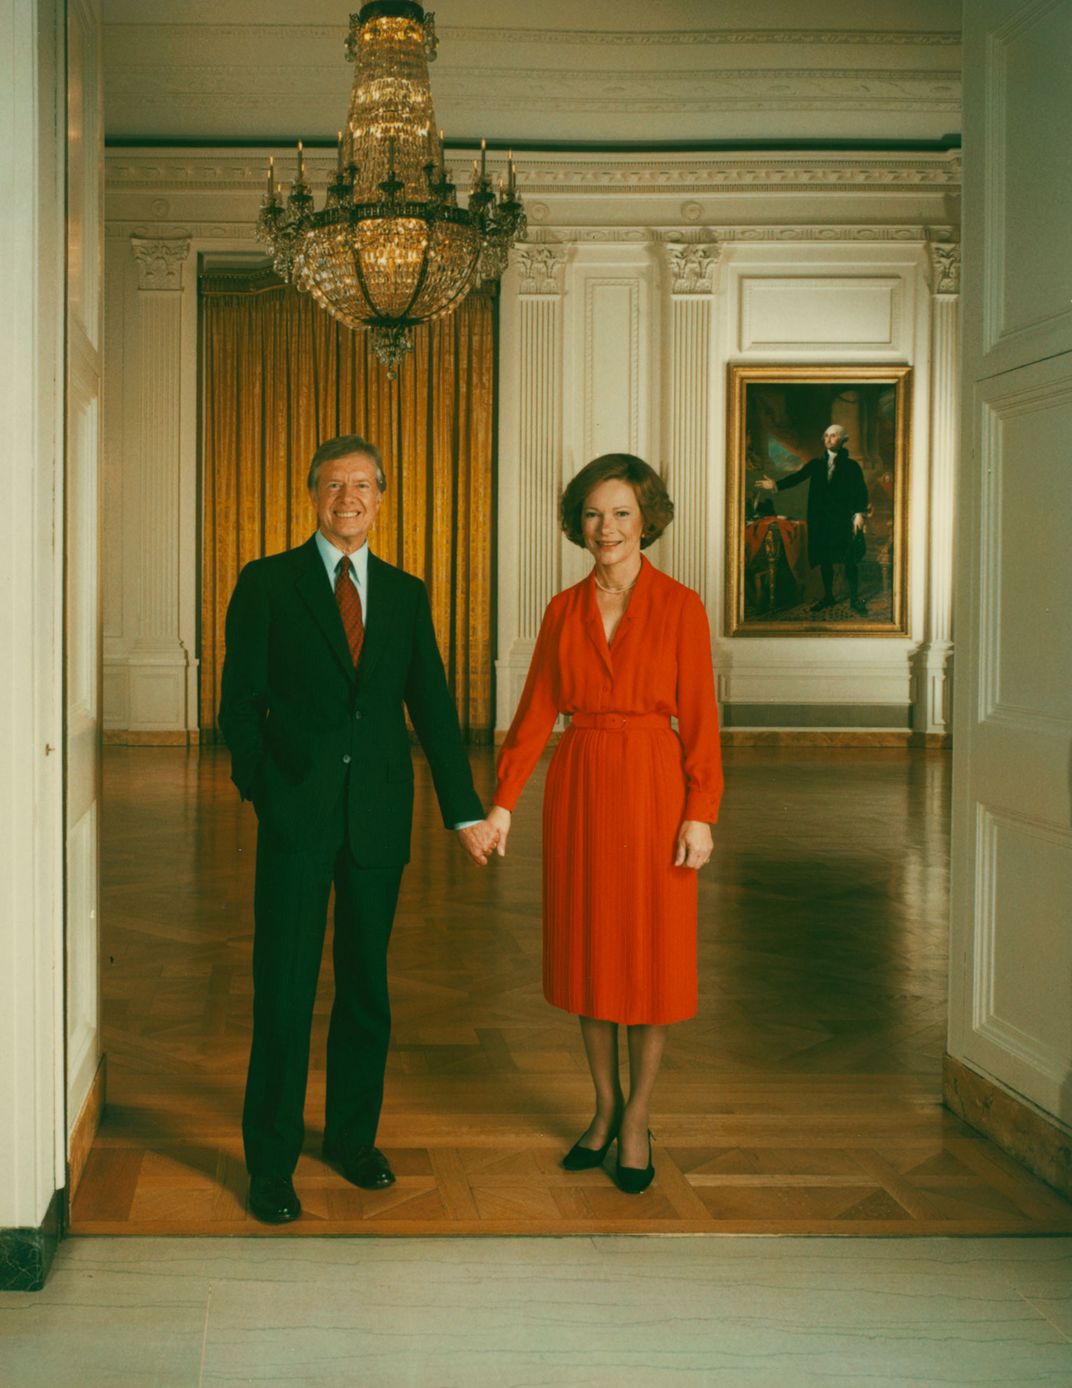 Ansel Adams' 1979 photograph of Jimmy and Rosalynn Carter